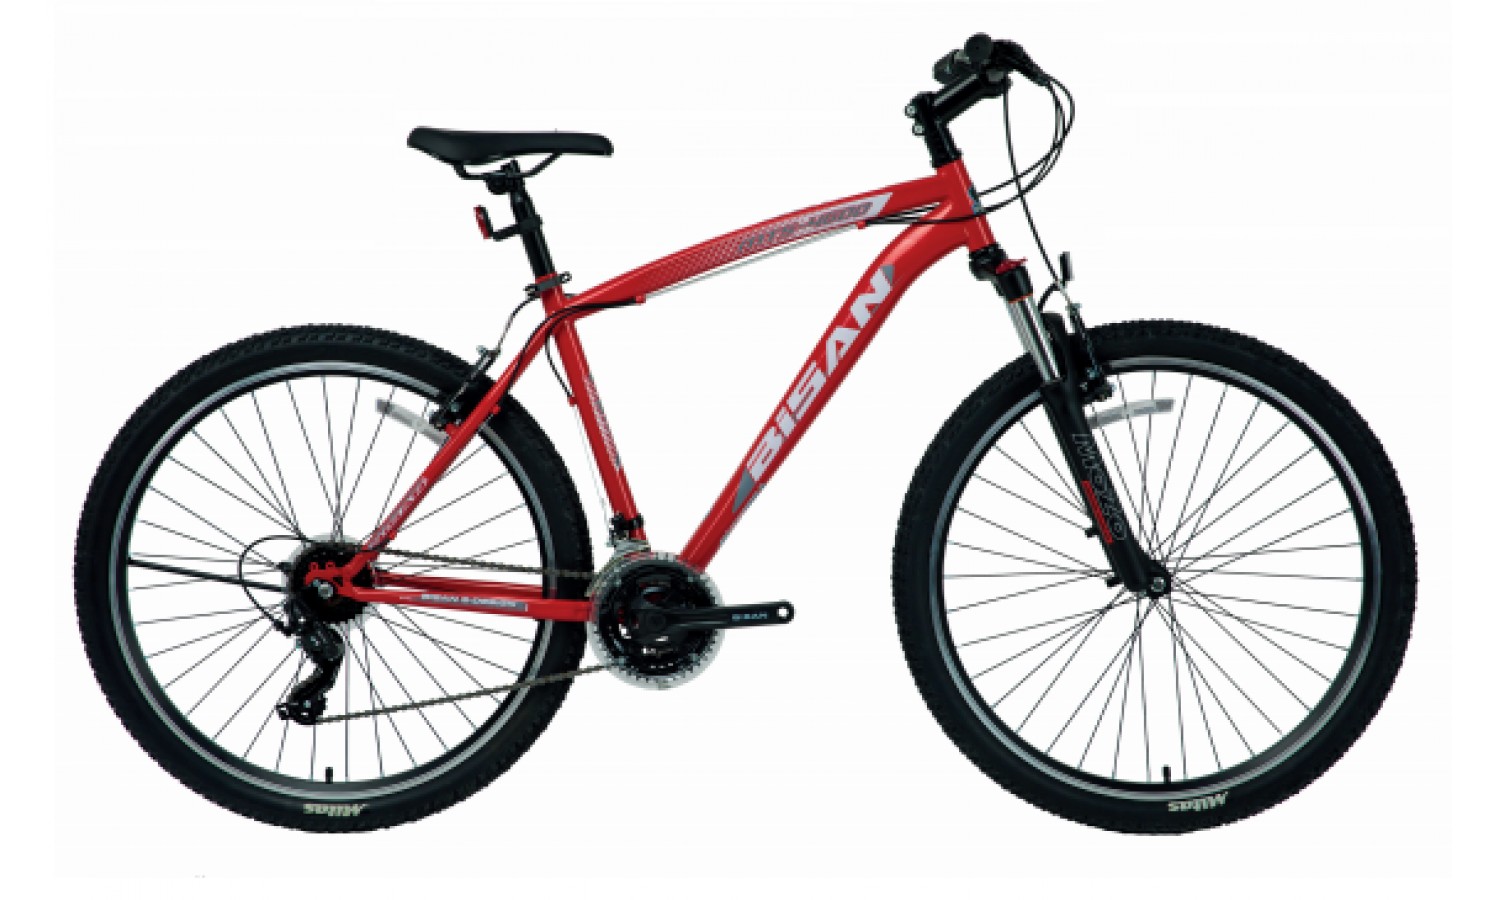 Bisan Mts 4600 26 V Dağ Bisikleti (Kırmızı-Beyaz)